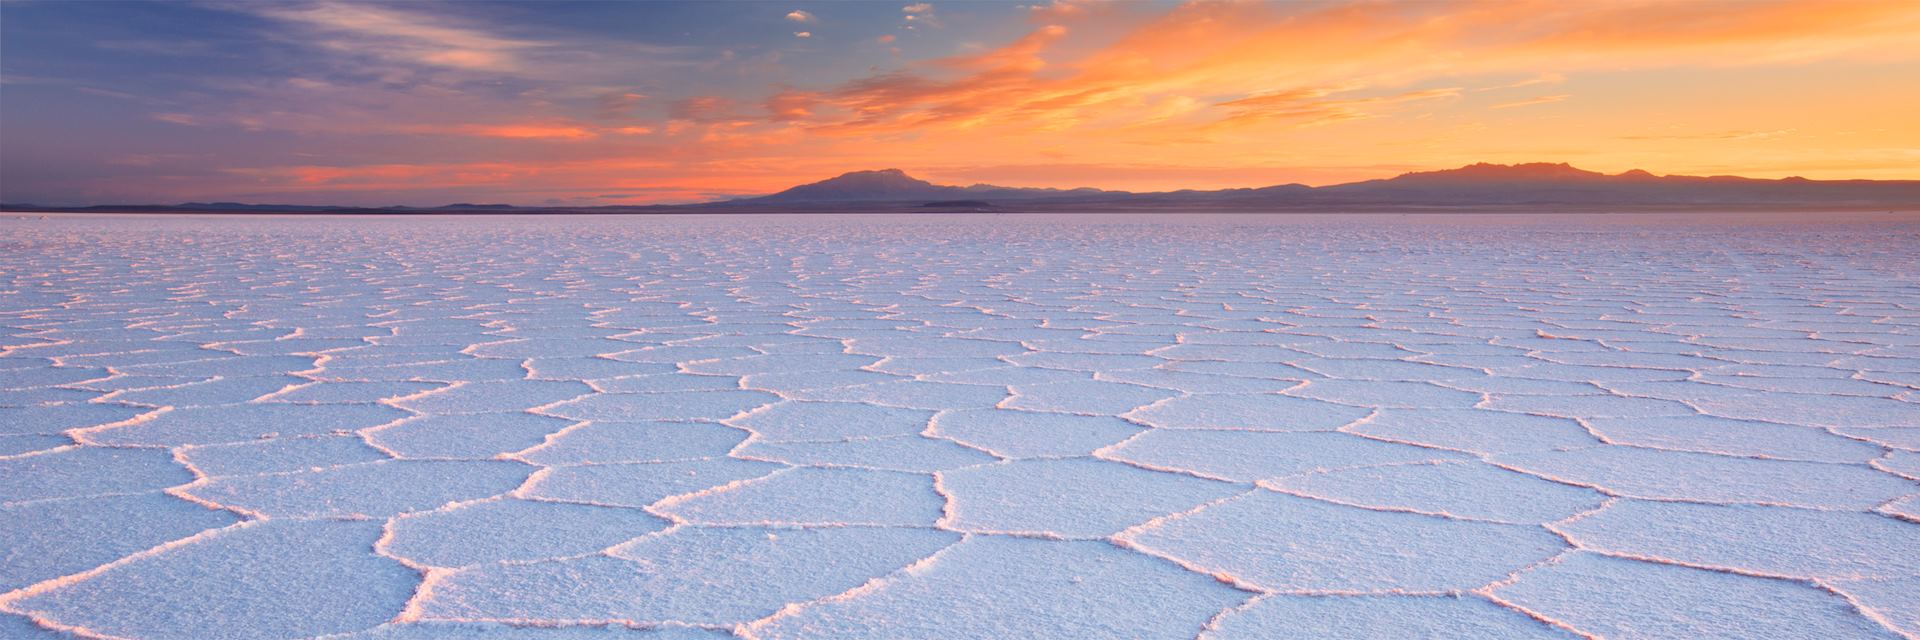 Salar de Uyuni, Southern Altiplano